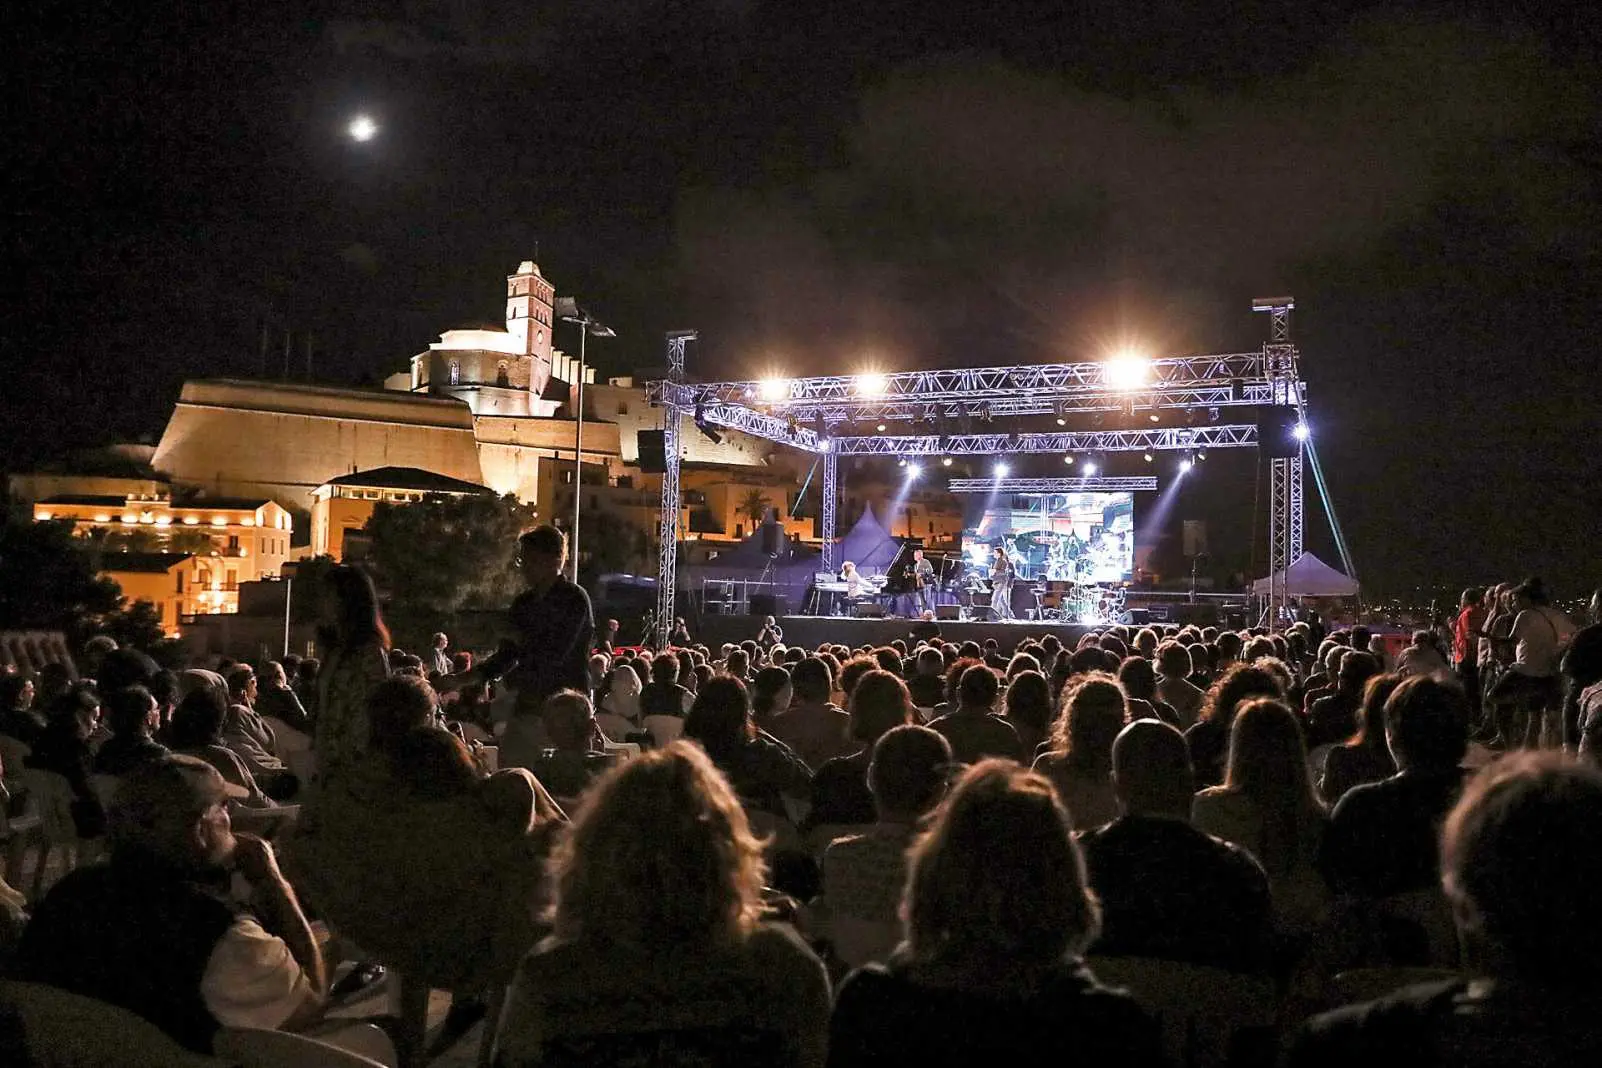 Eivissa Jazz Festival. A must for jazz lovers